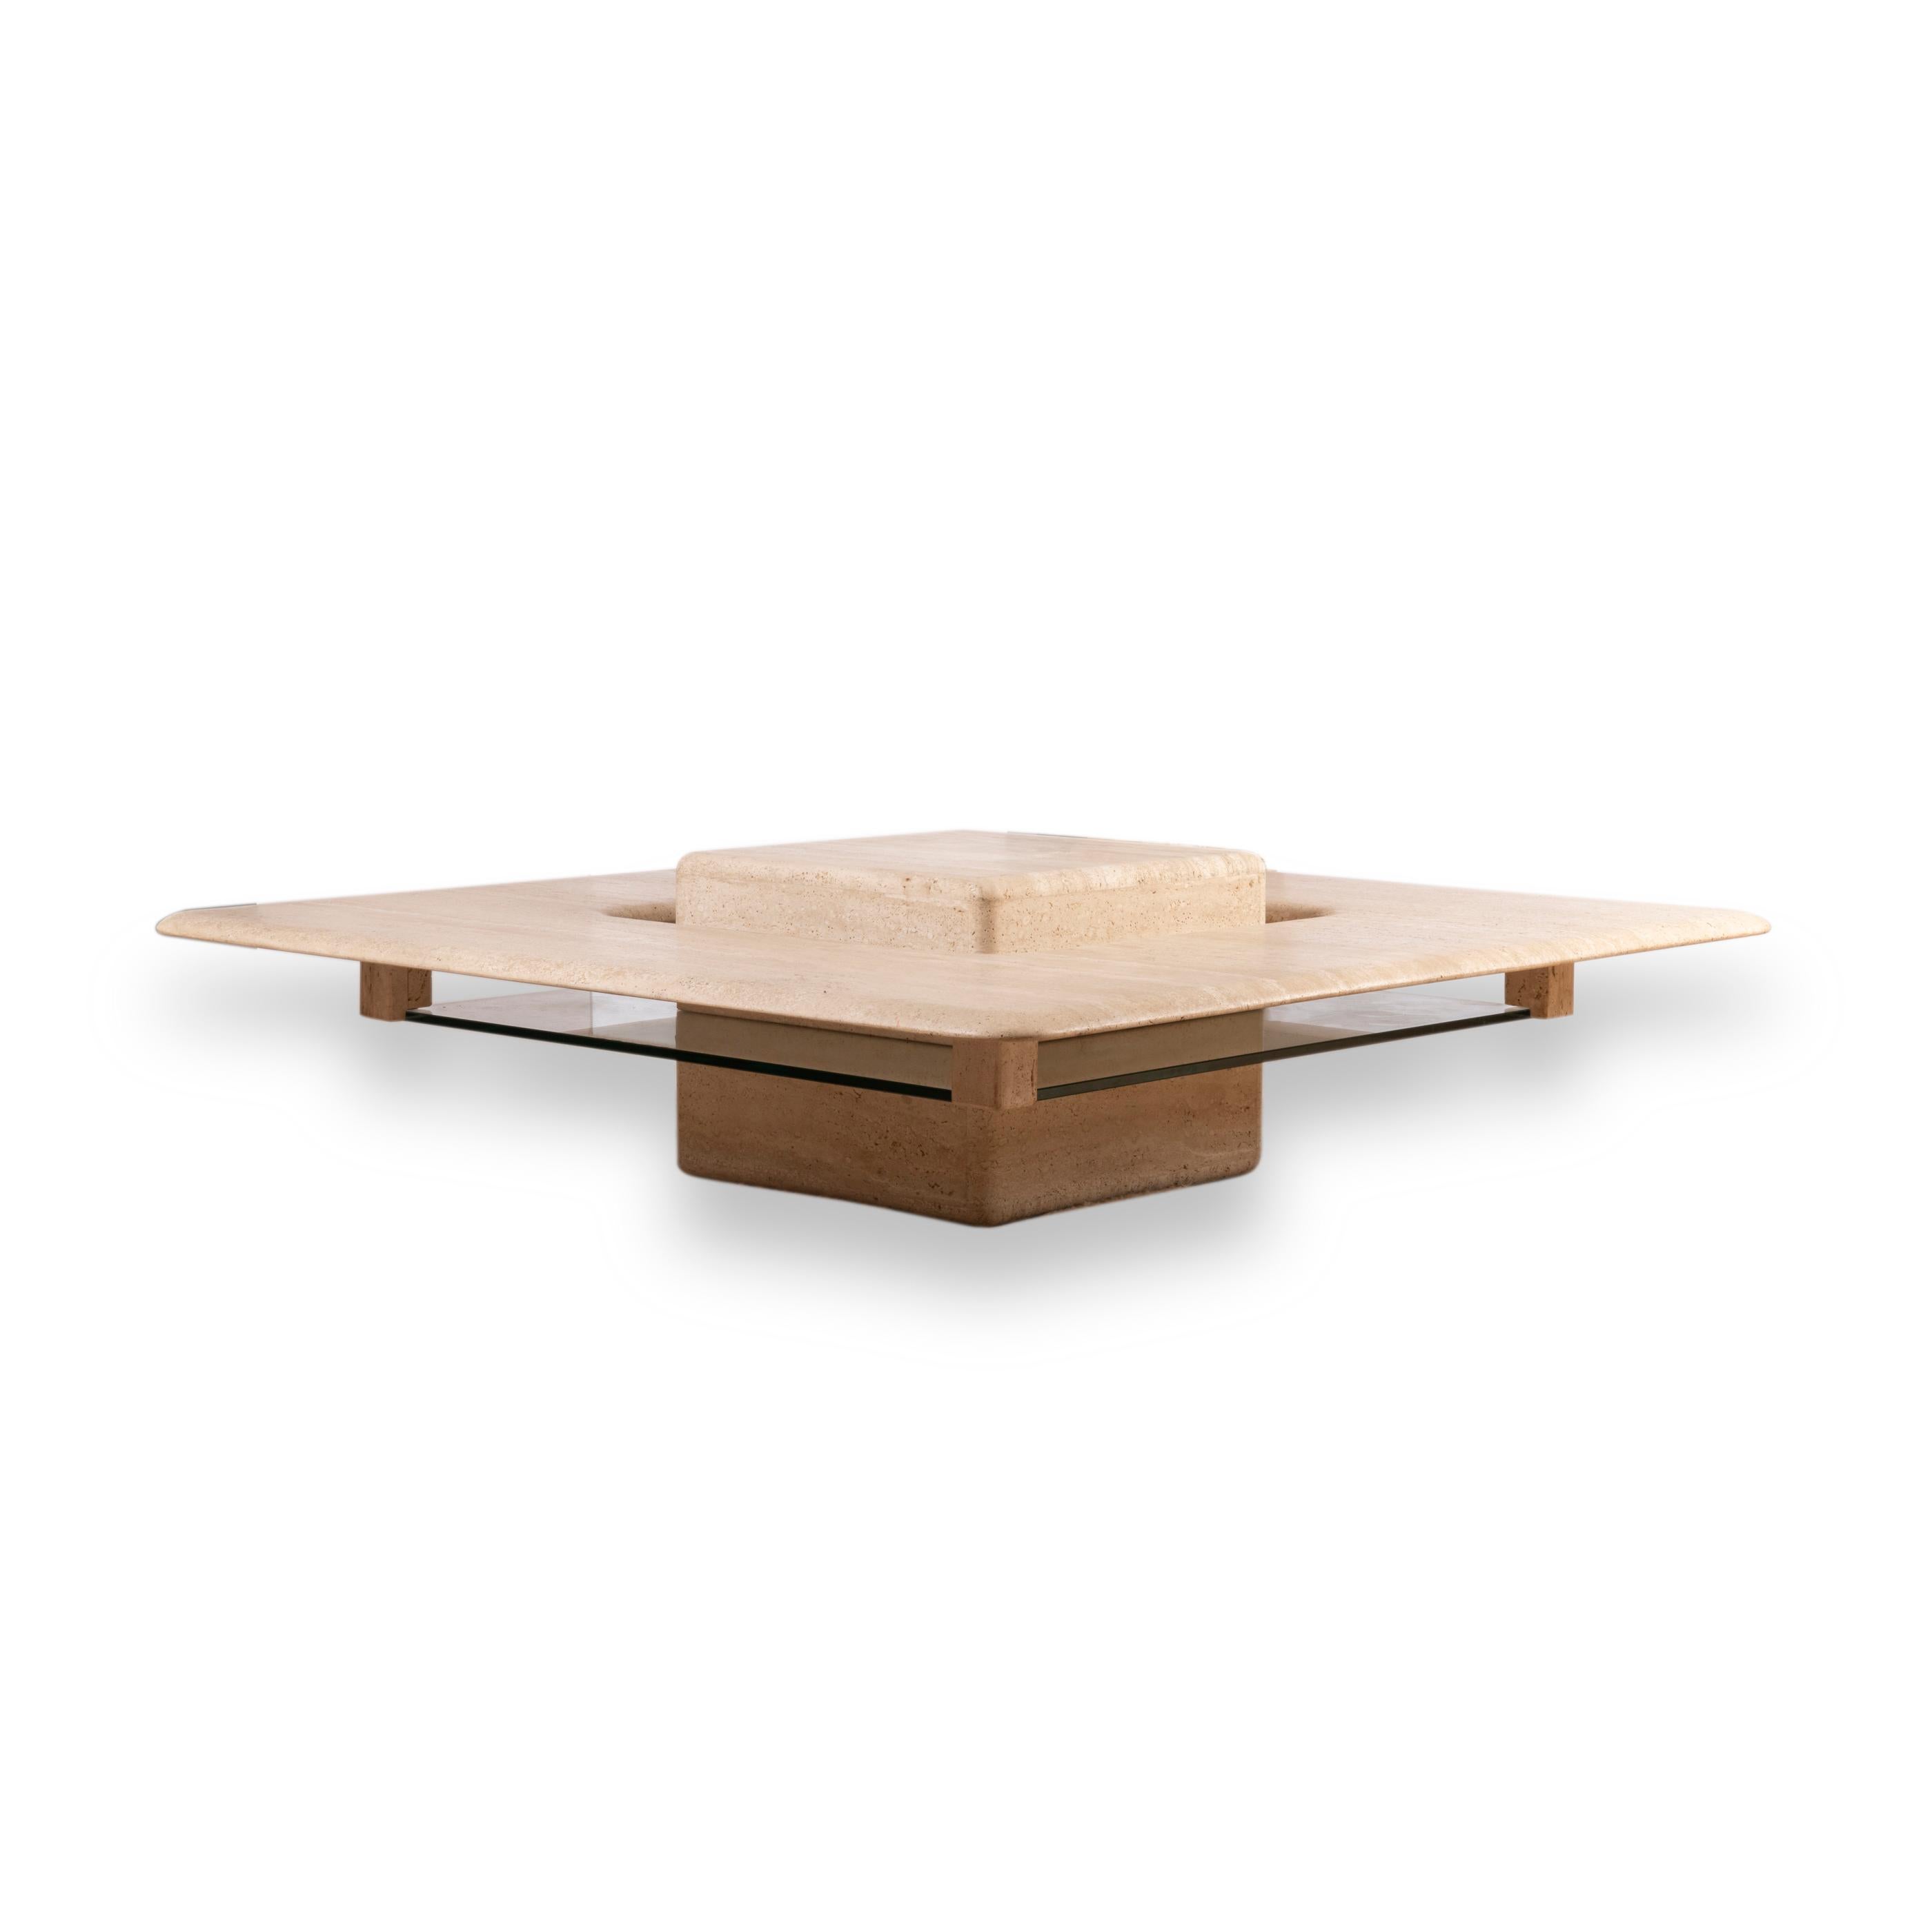 Travertine coffee table
model 